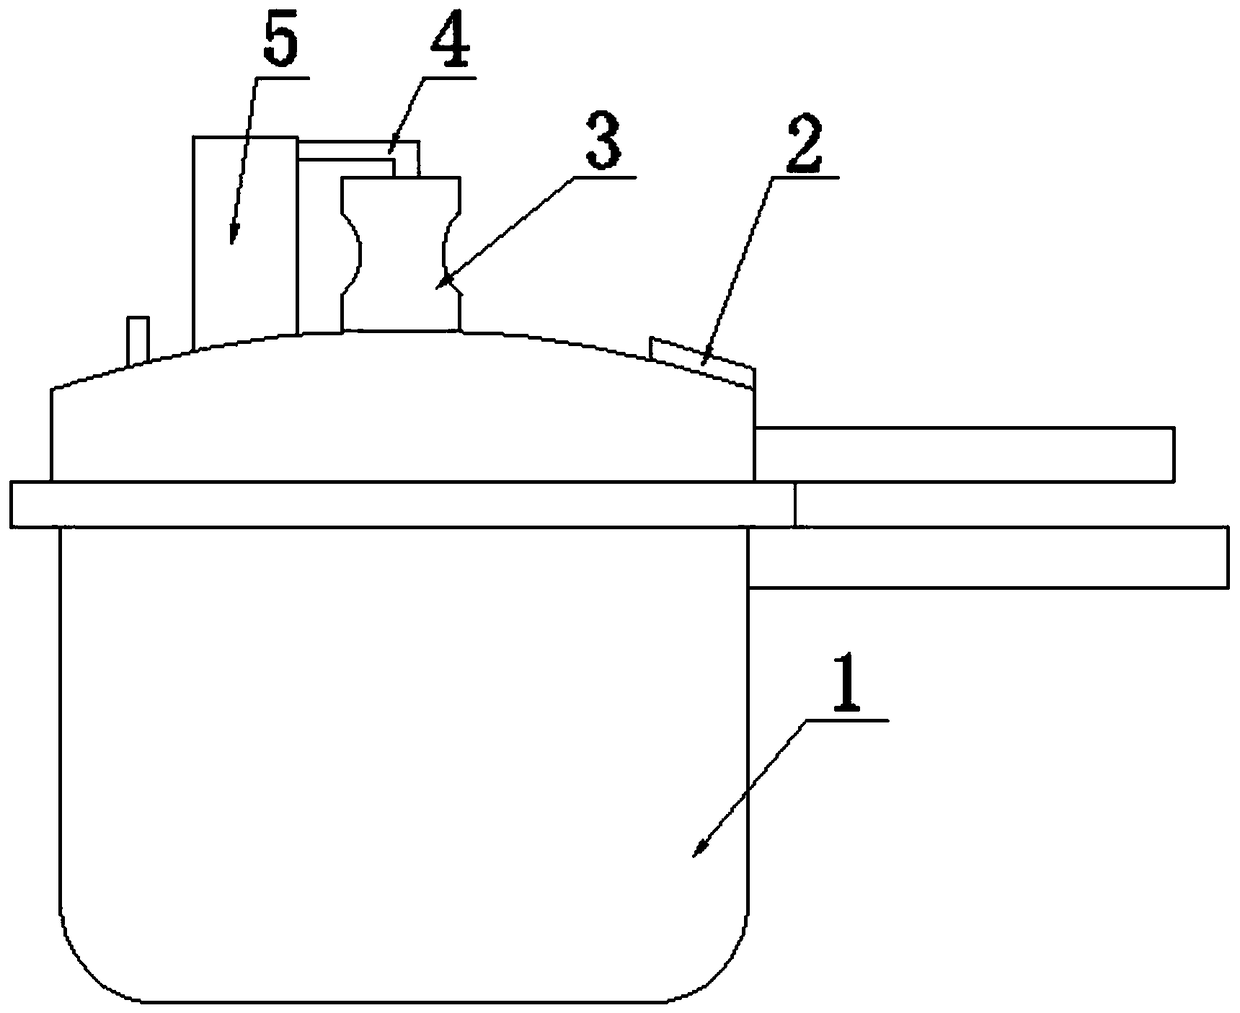 Pressurizing-type pressure cooker